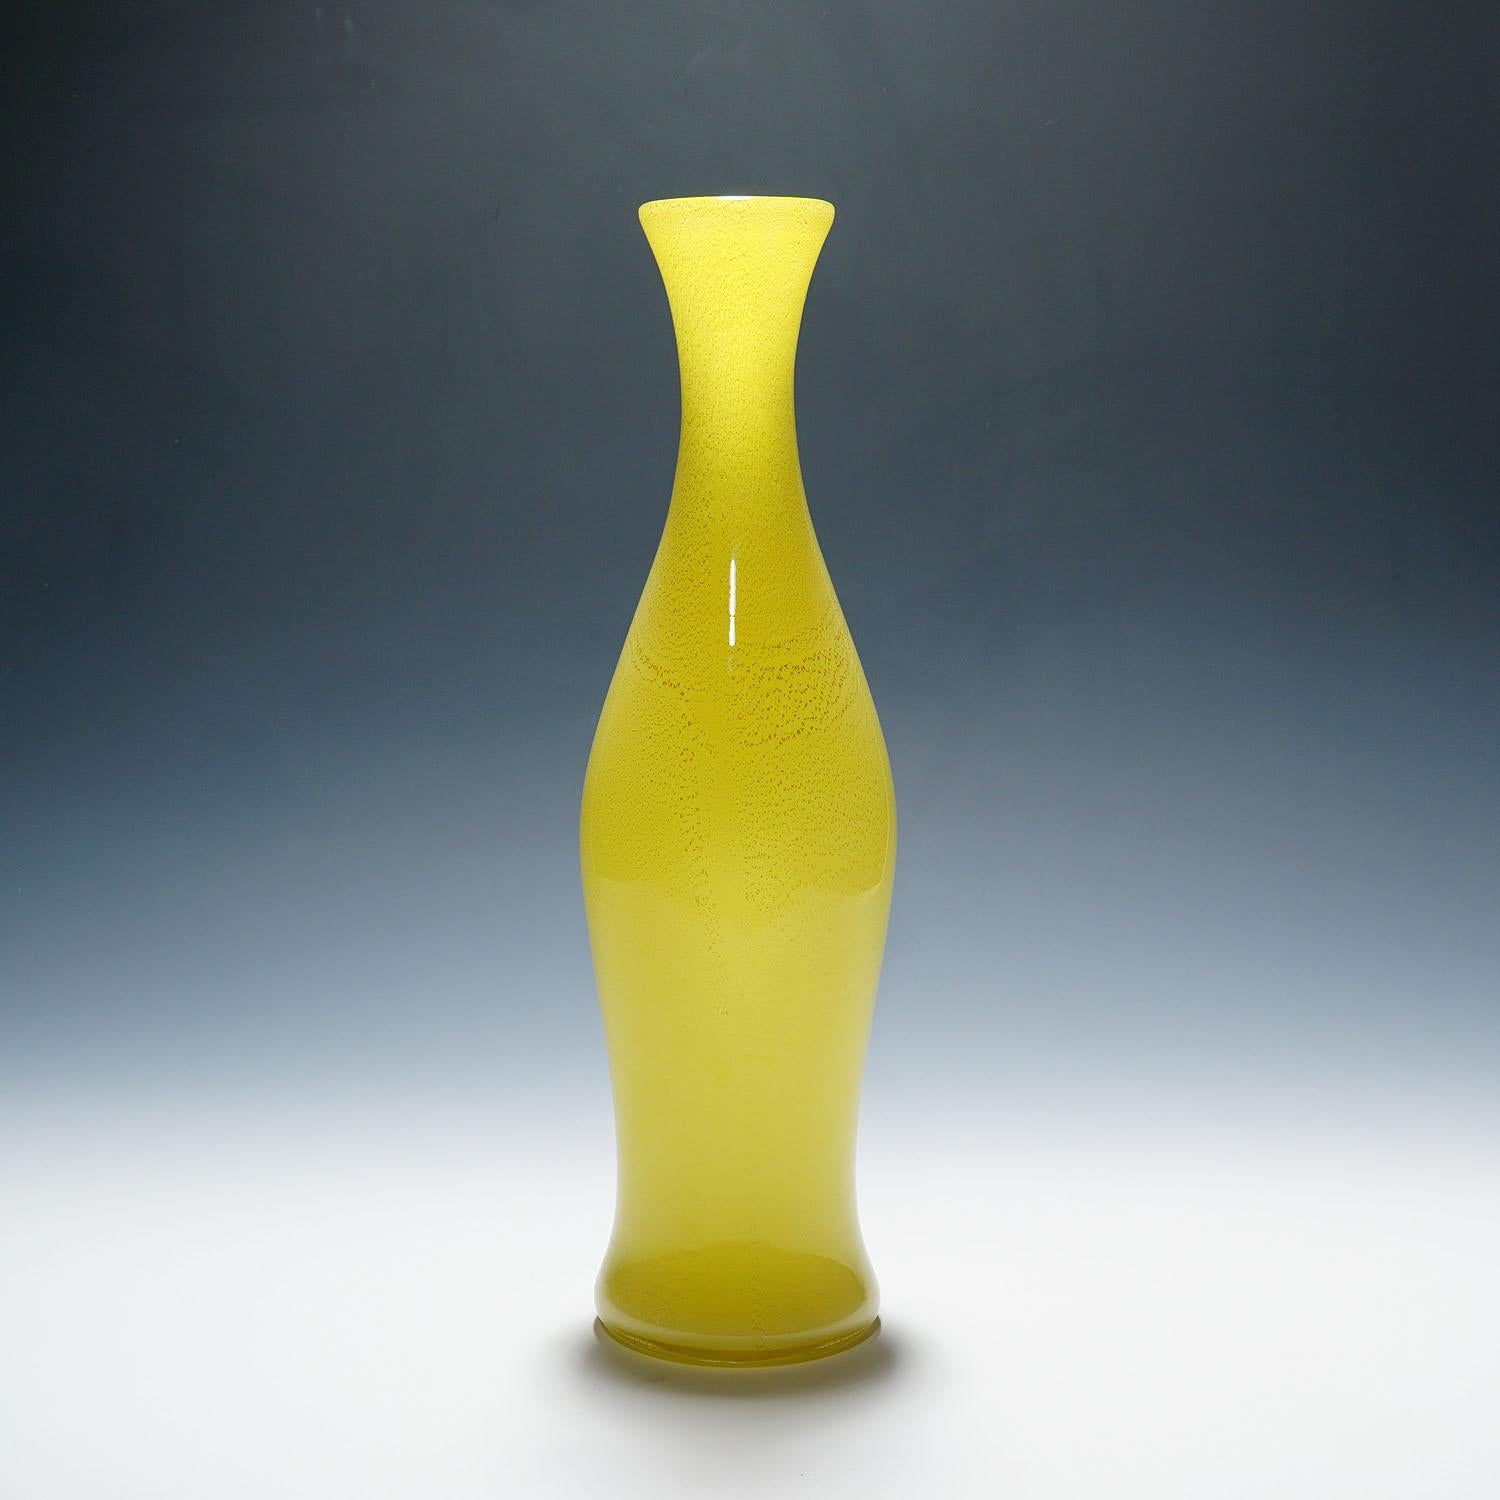 A Large Soffiato Glass Vase by Galliano Ferro, Murano ca. 1950s

A large art glass vase manufactured by Galliano Ferro and most probably designed by Giorigio Ferro or Vinicio Vianello around 1950. Thin glass in multiple layers of yellow, white and